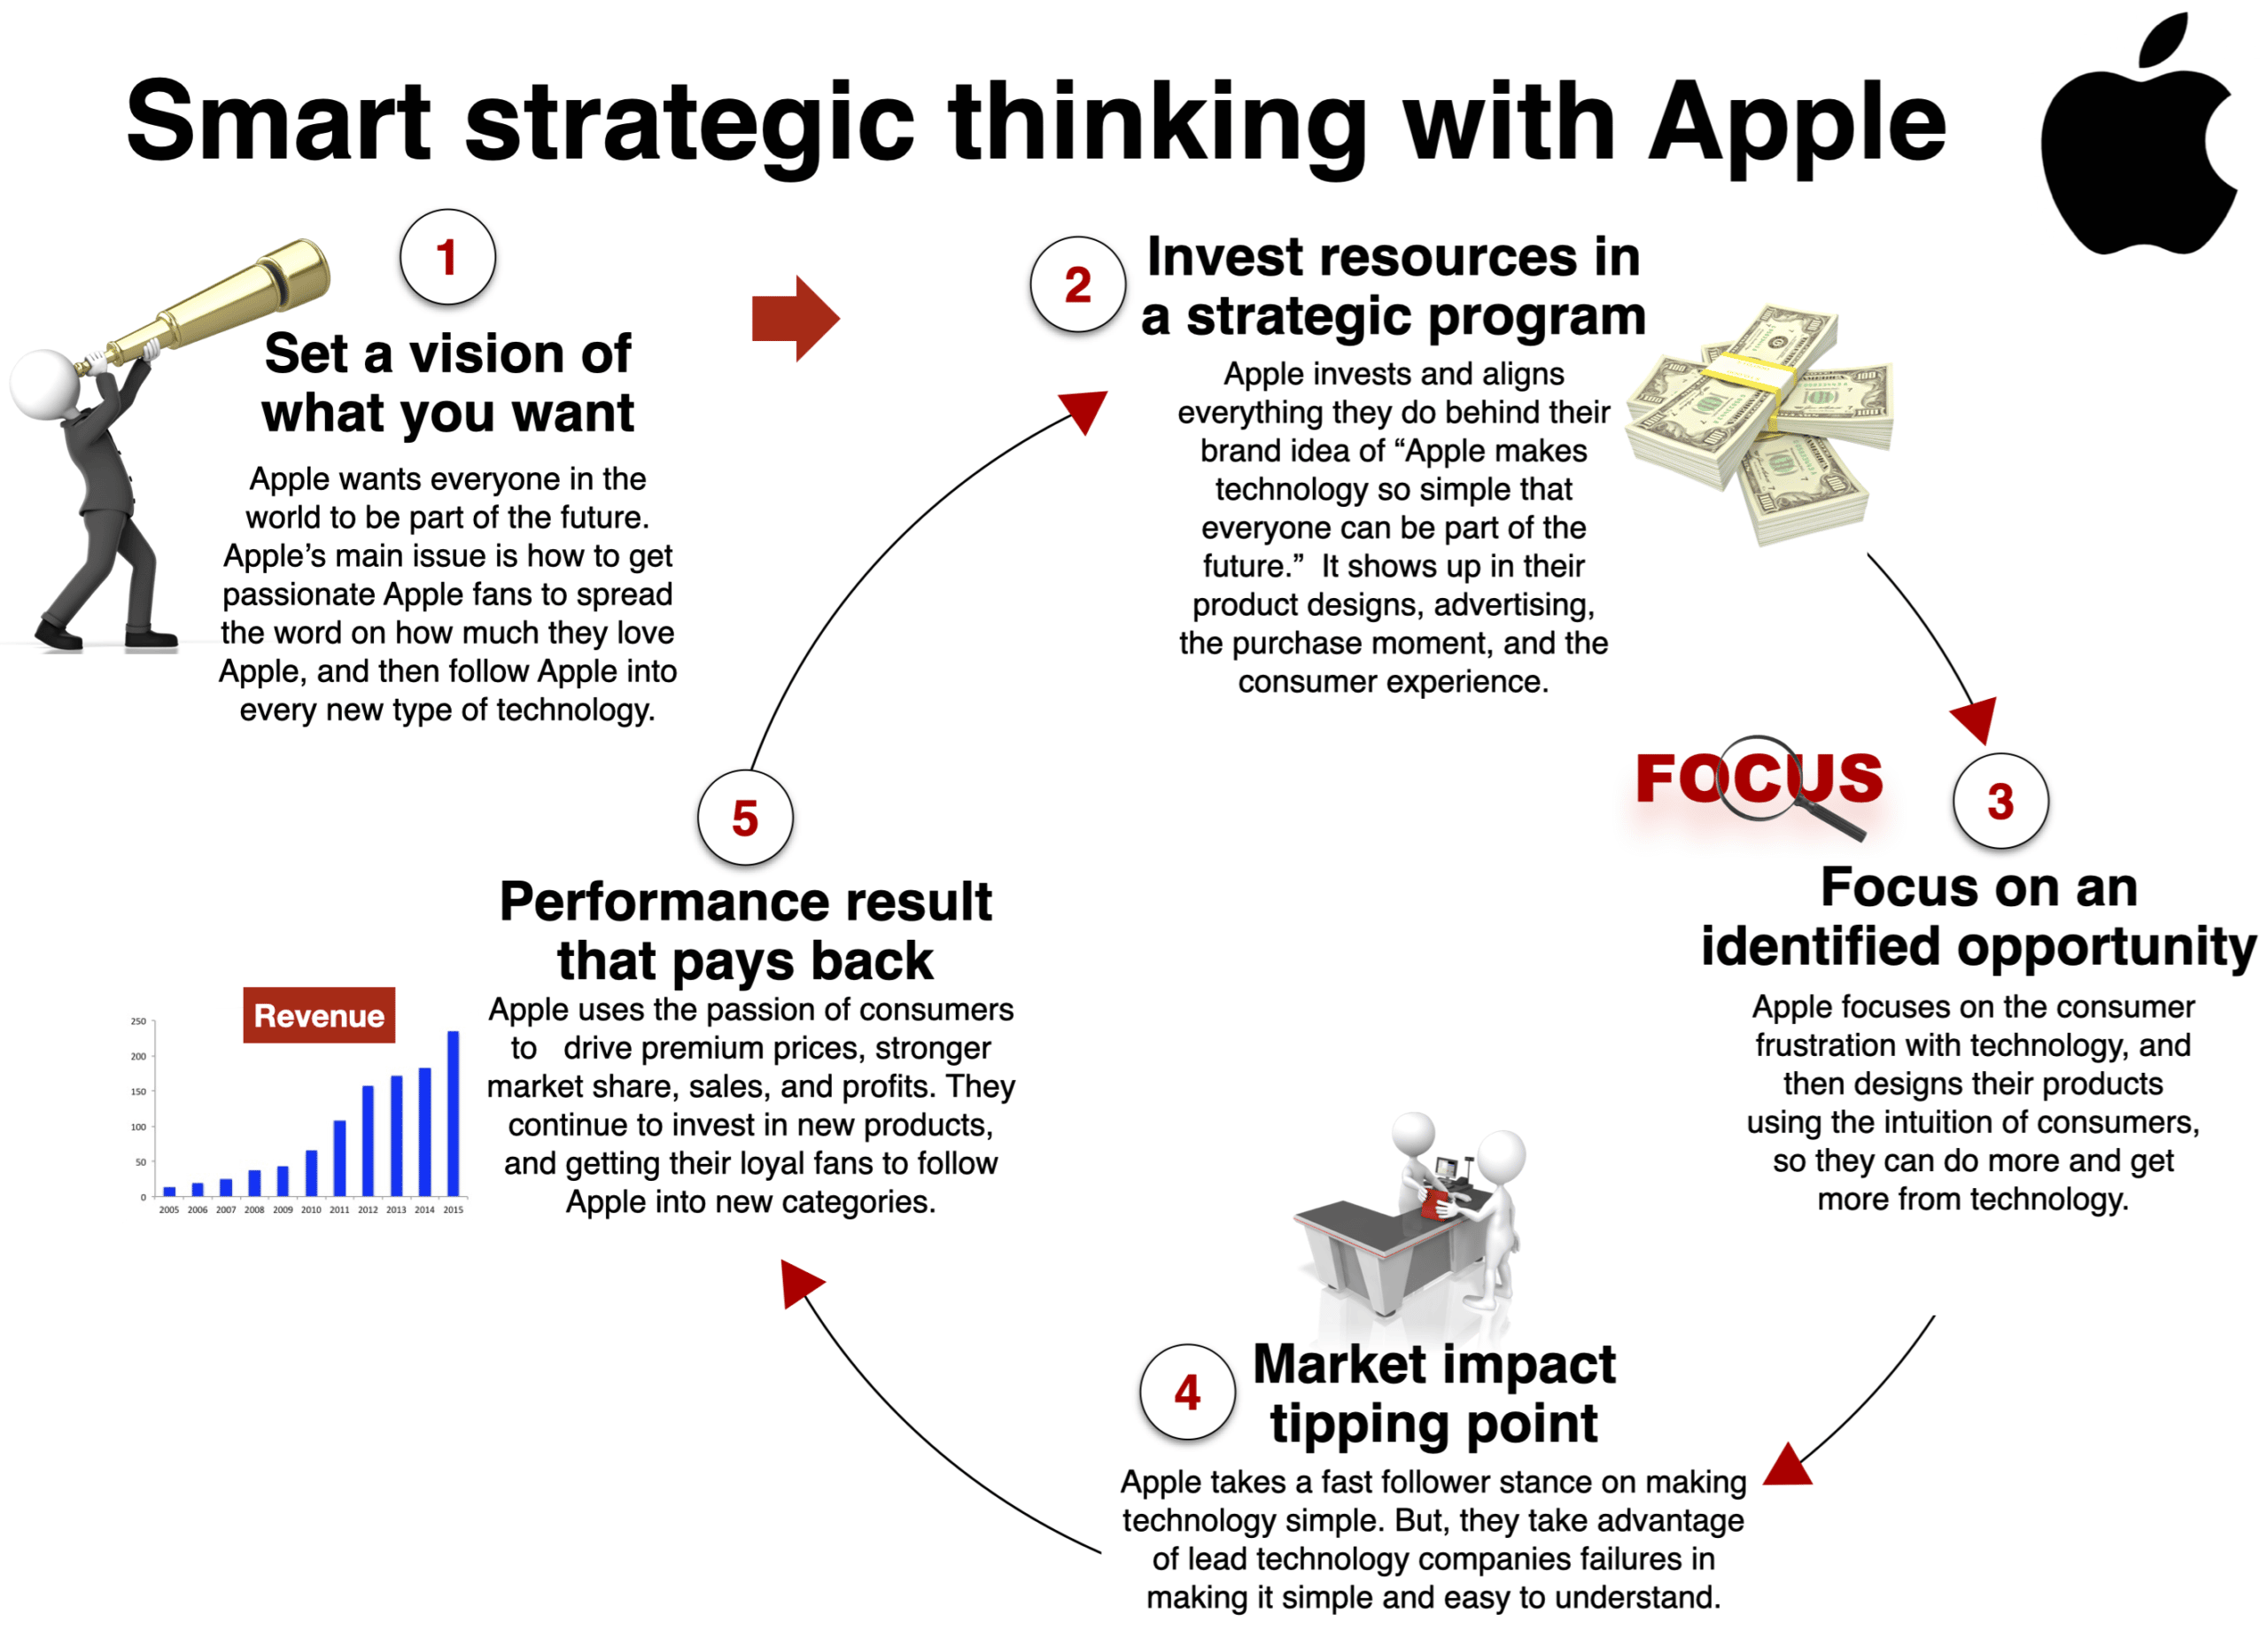 How Steve Jobs built the Apple strategy around simplicity